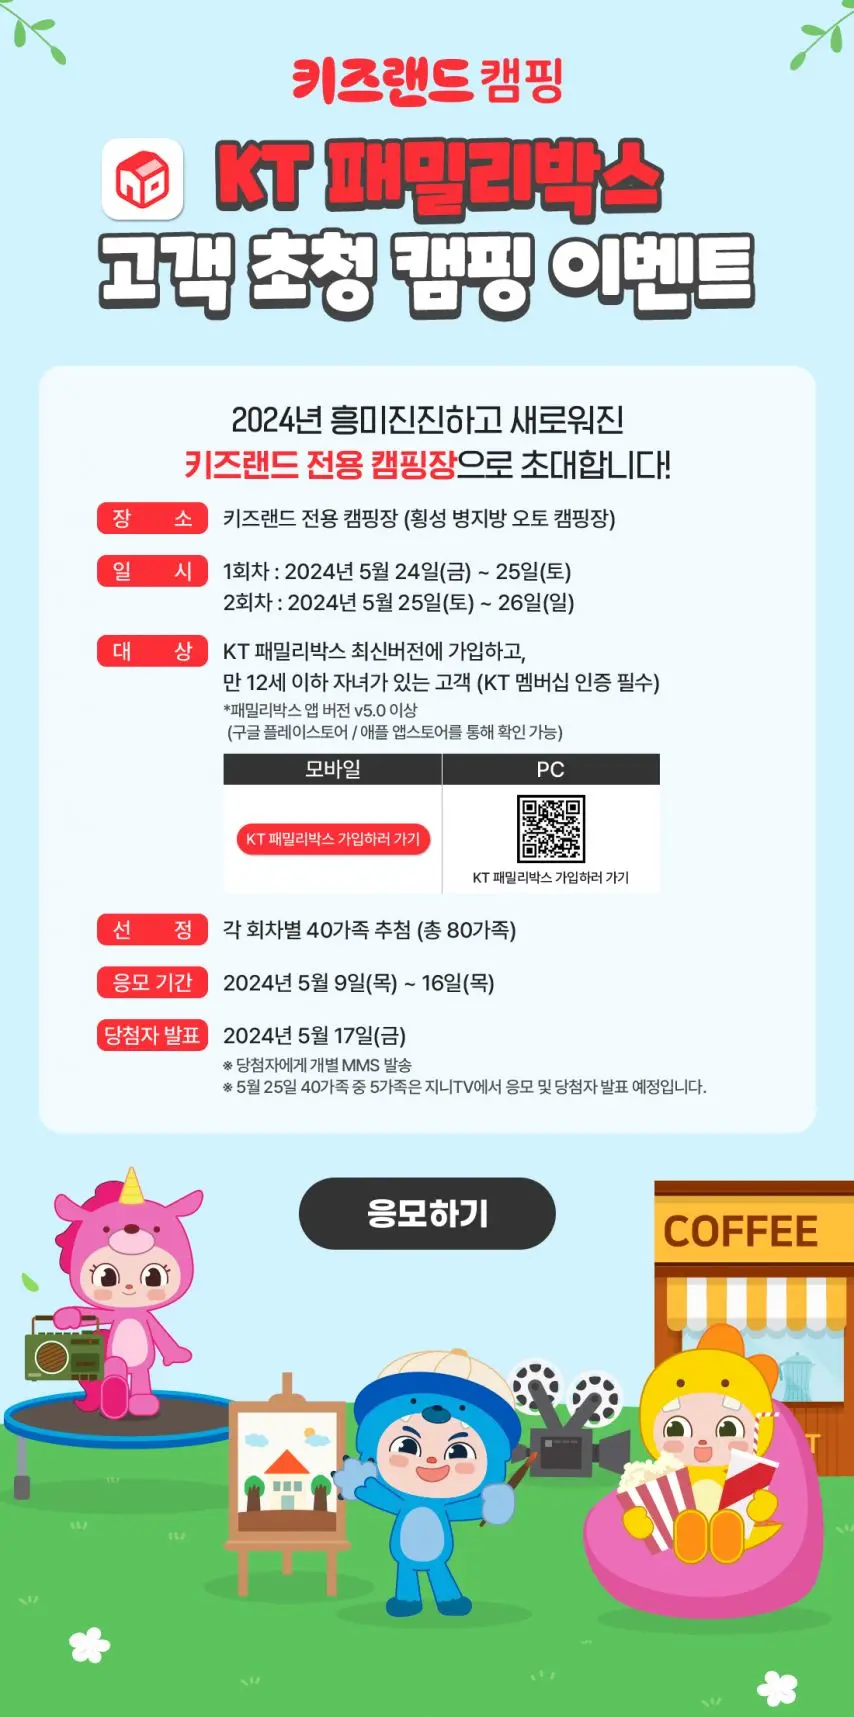 KT 패밀리박스 고객 초청 캠핑 이벤트 | mbong.kr 엠봉